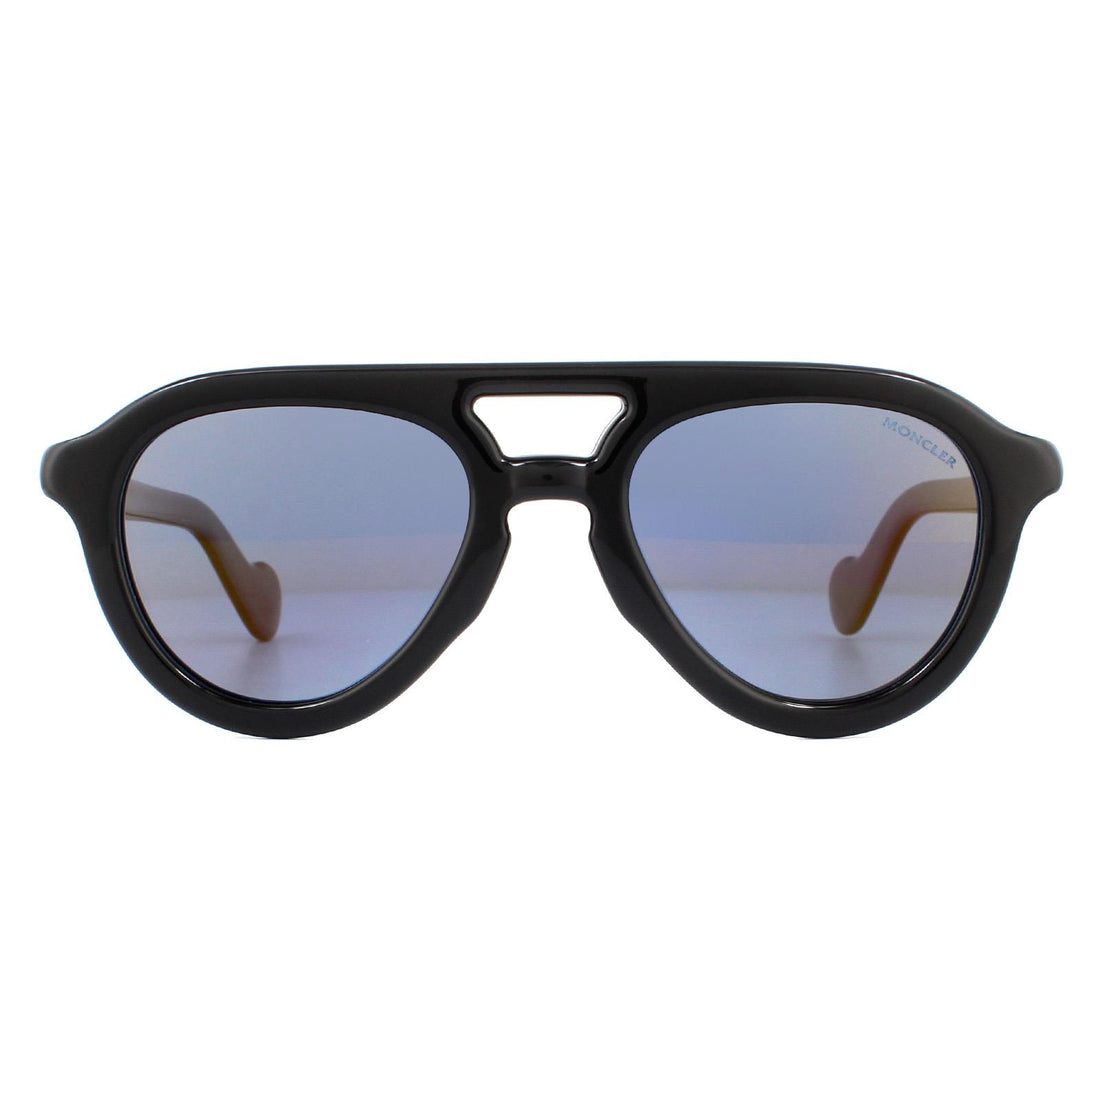 Moncler ML0078 Sunglasses Black / Blue Polarized